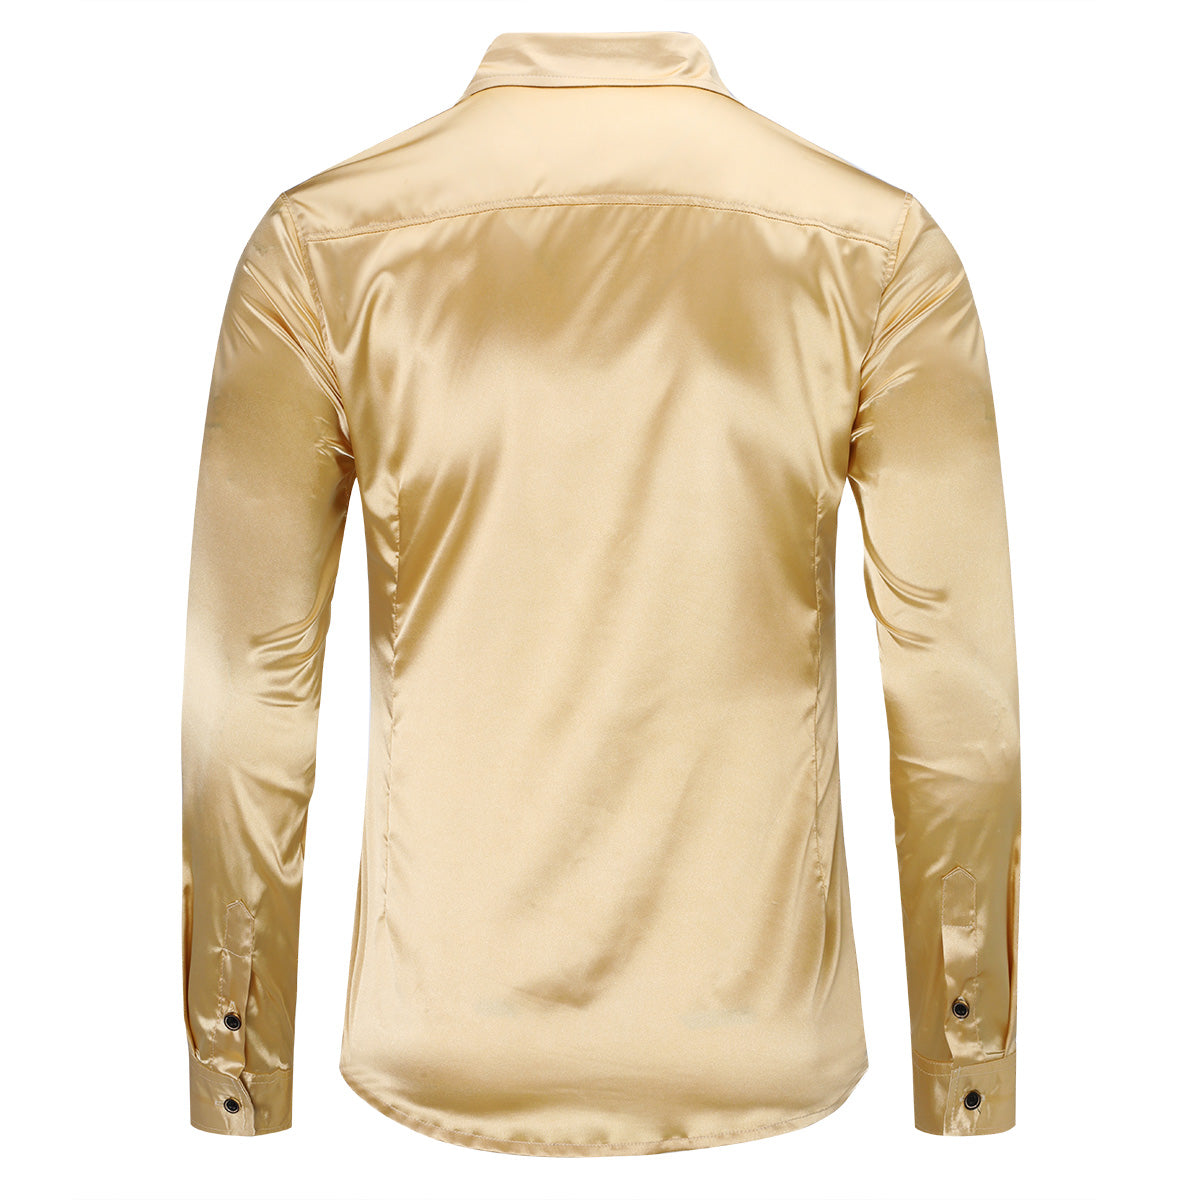 Men's Casual Fashion Shiny Long Sleeve Lapel Shirt Gold